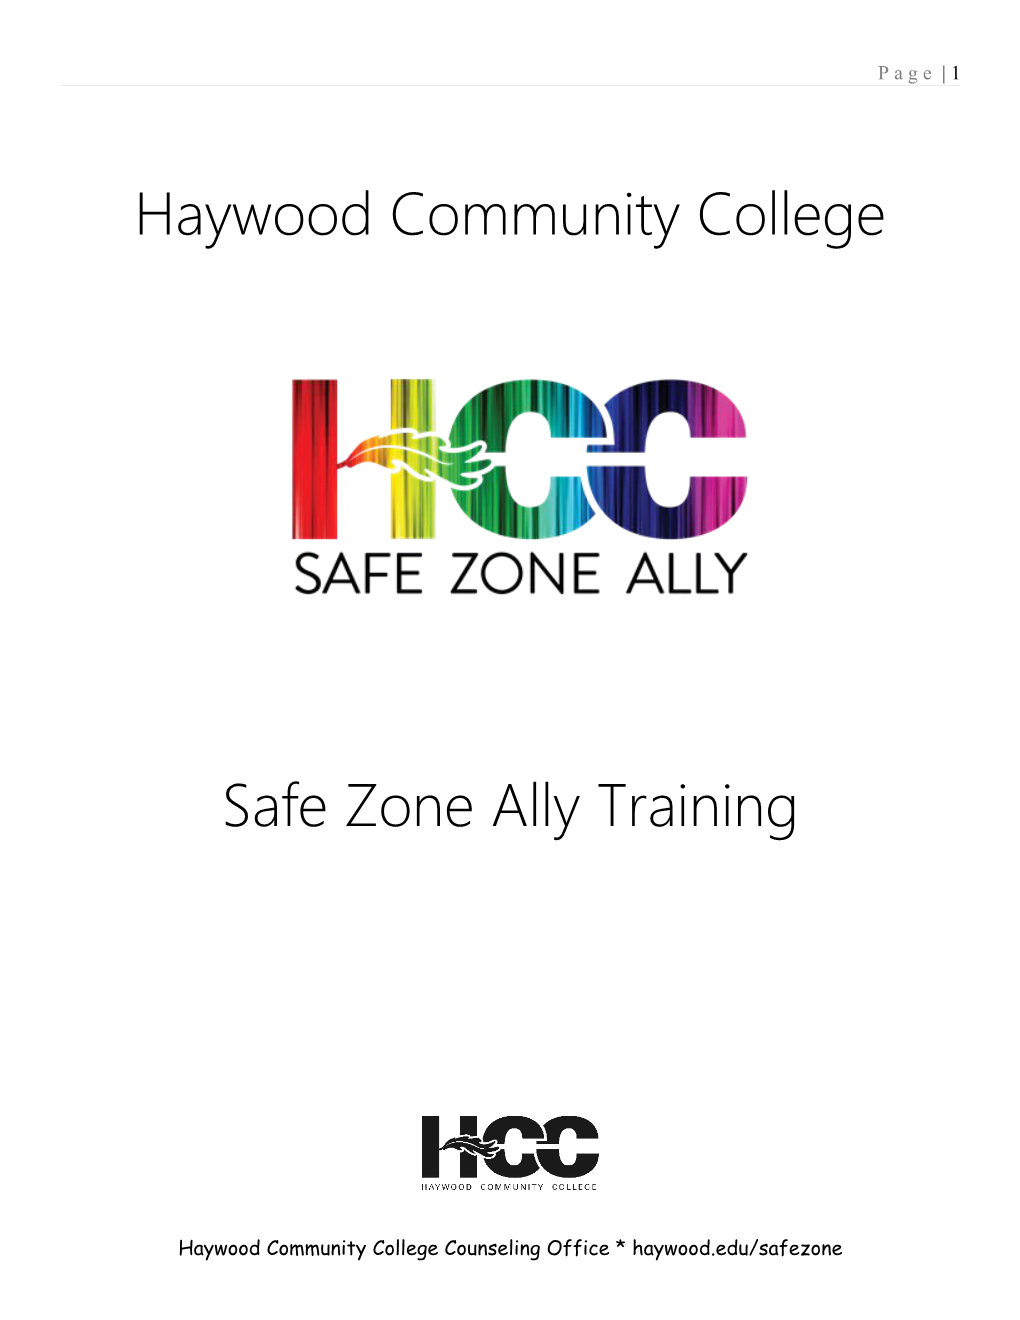 Safe Zone Ally Training